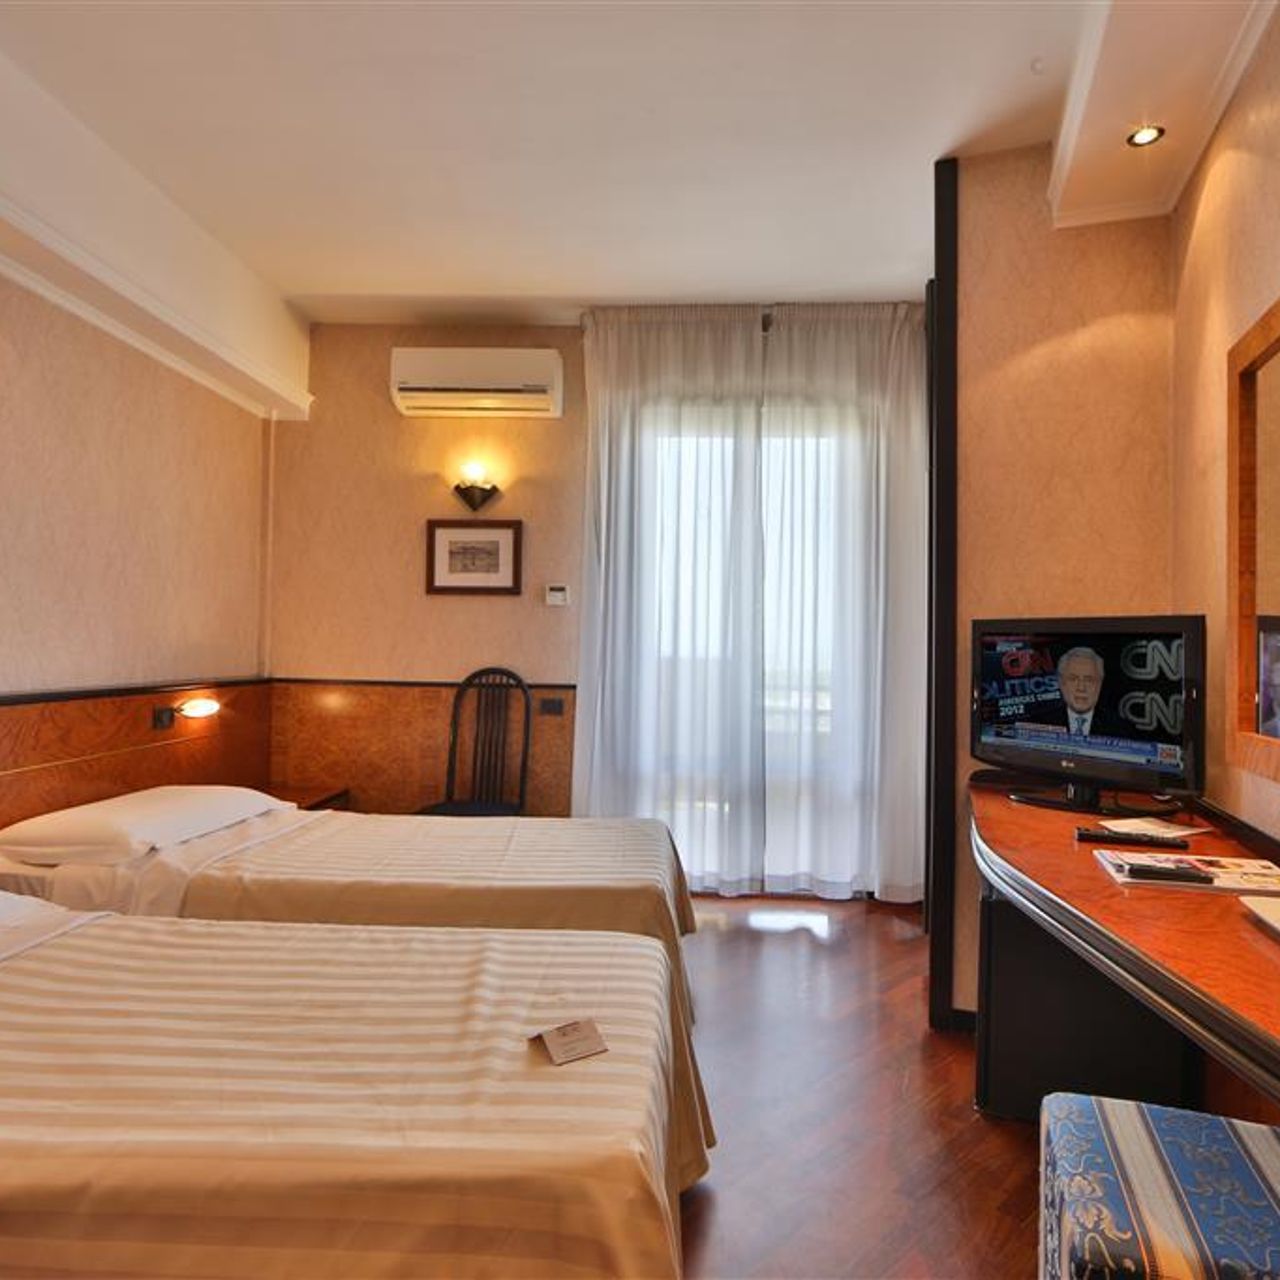 David Palace Hotel - Porto S. Giorgio - Great prices at HOTEL INFO